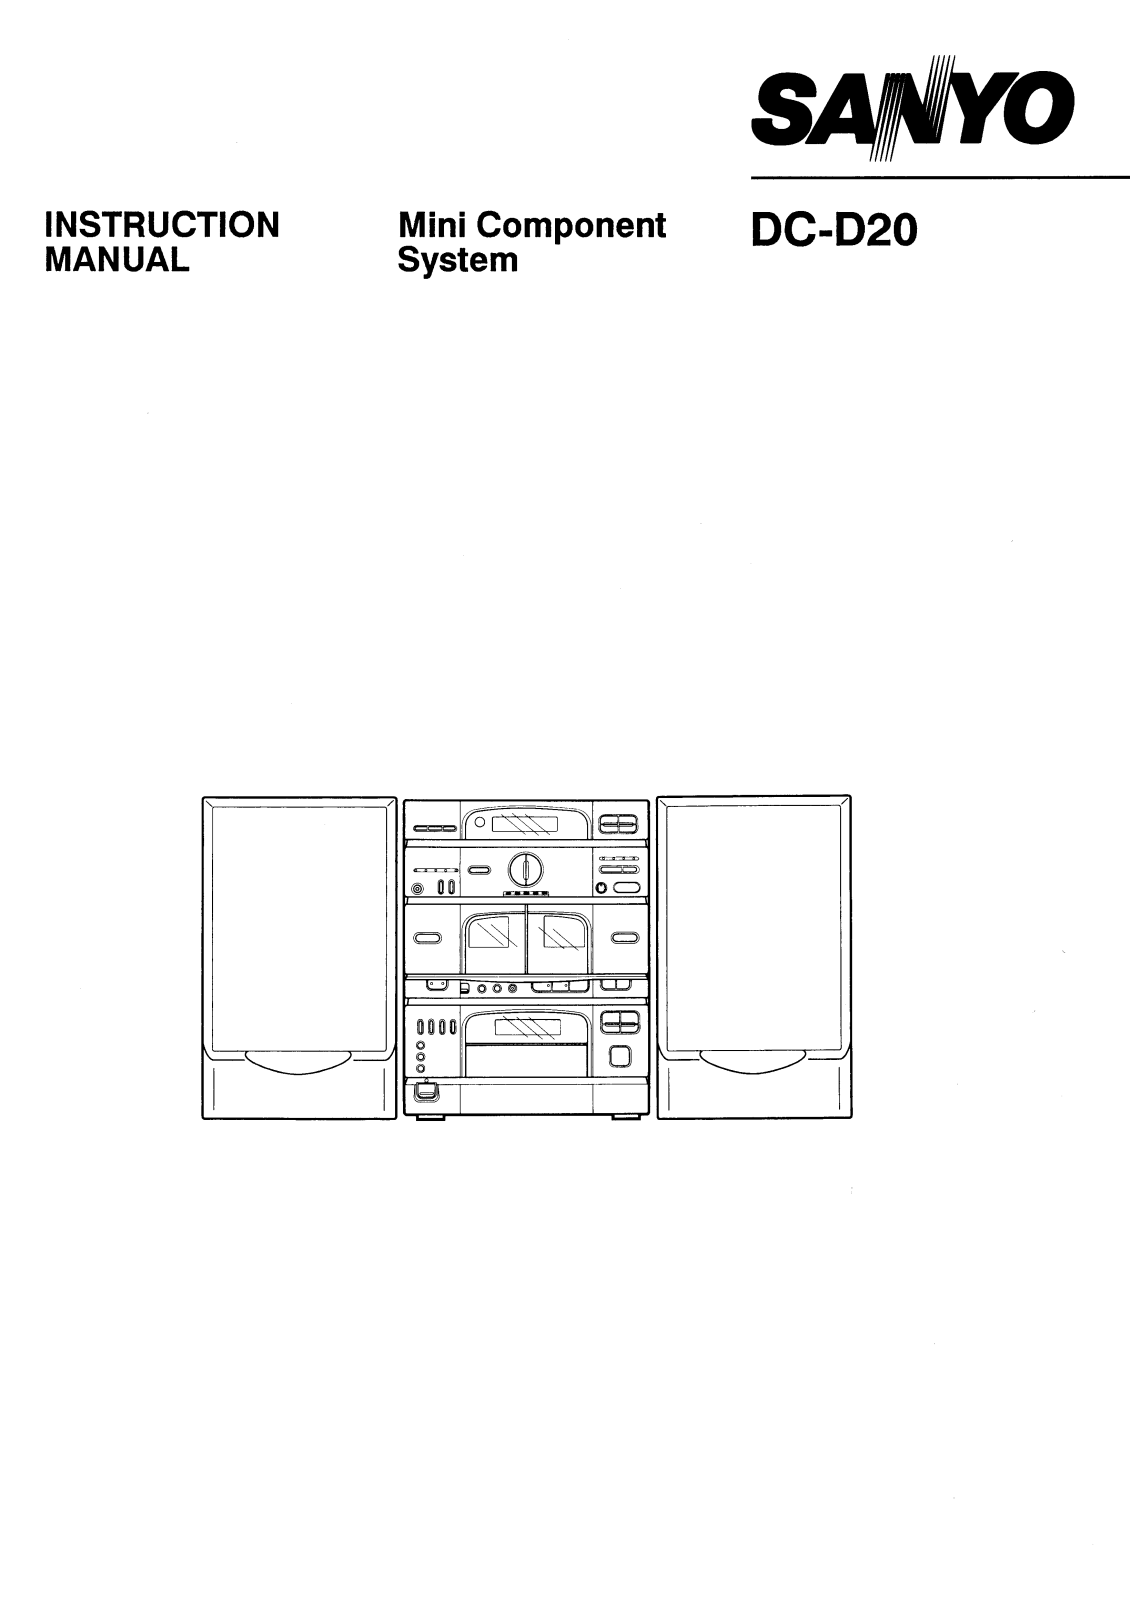 Sanyo DC-D20 Instruction Manual